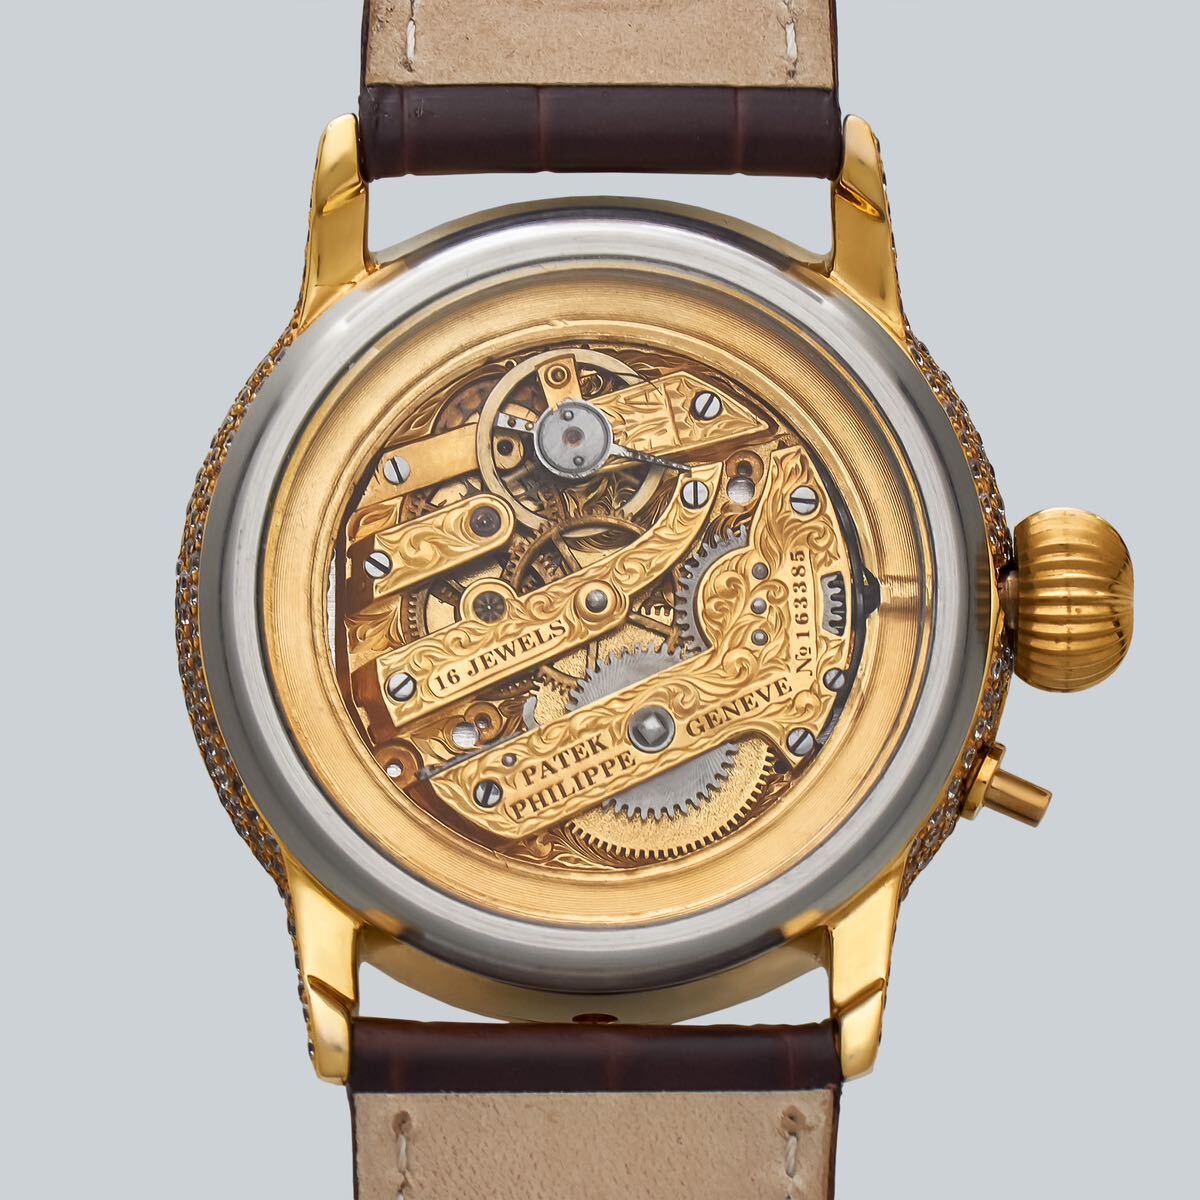 Marriage Watch Patek Philippe 40mm Men's Watch With A Pocket Watch Manual Winding Skeleton